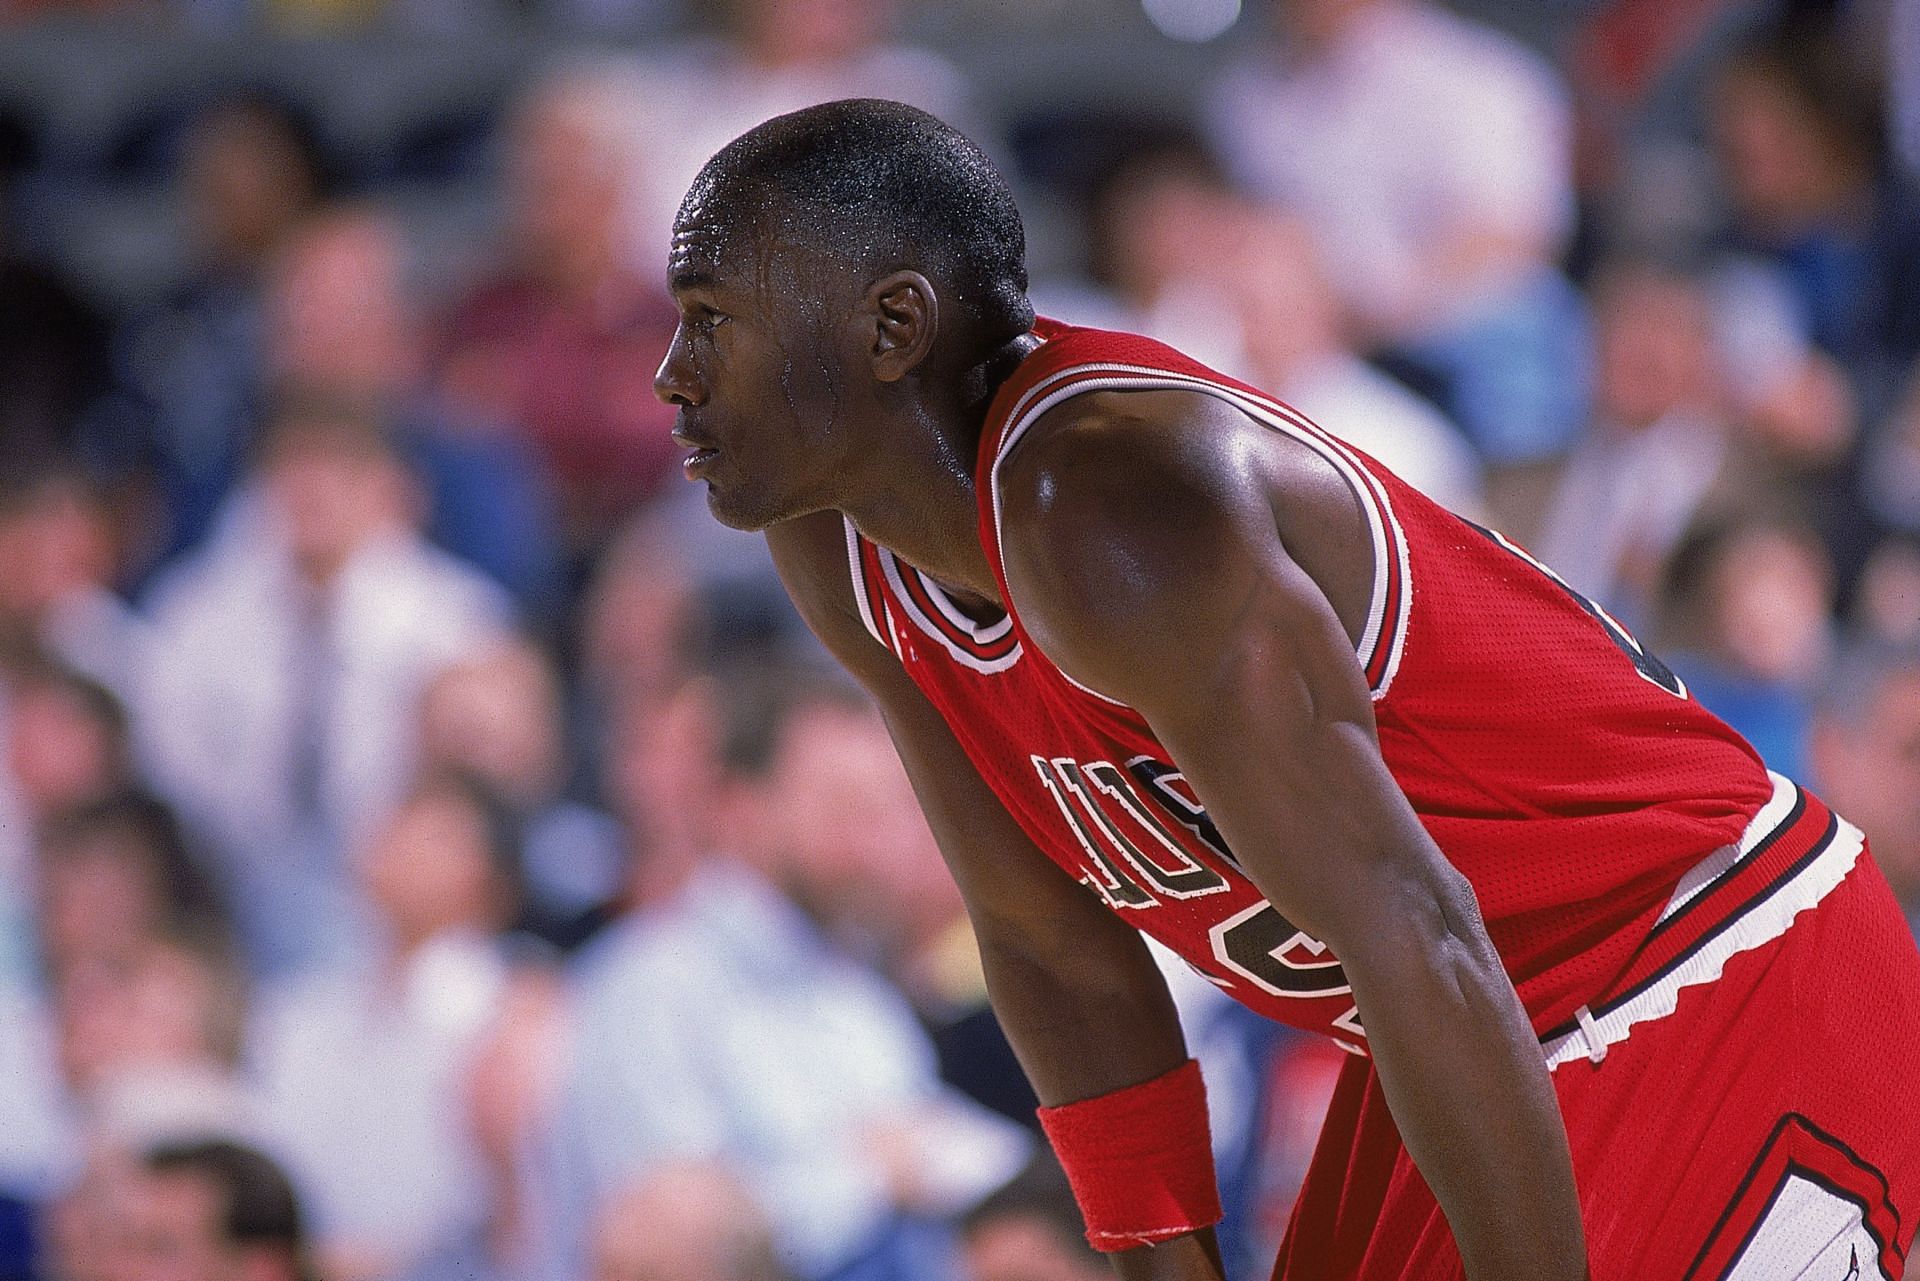 Game-worn Michael Jordan jersey sold for record $1.38 million